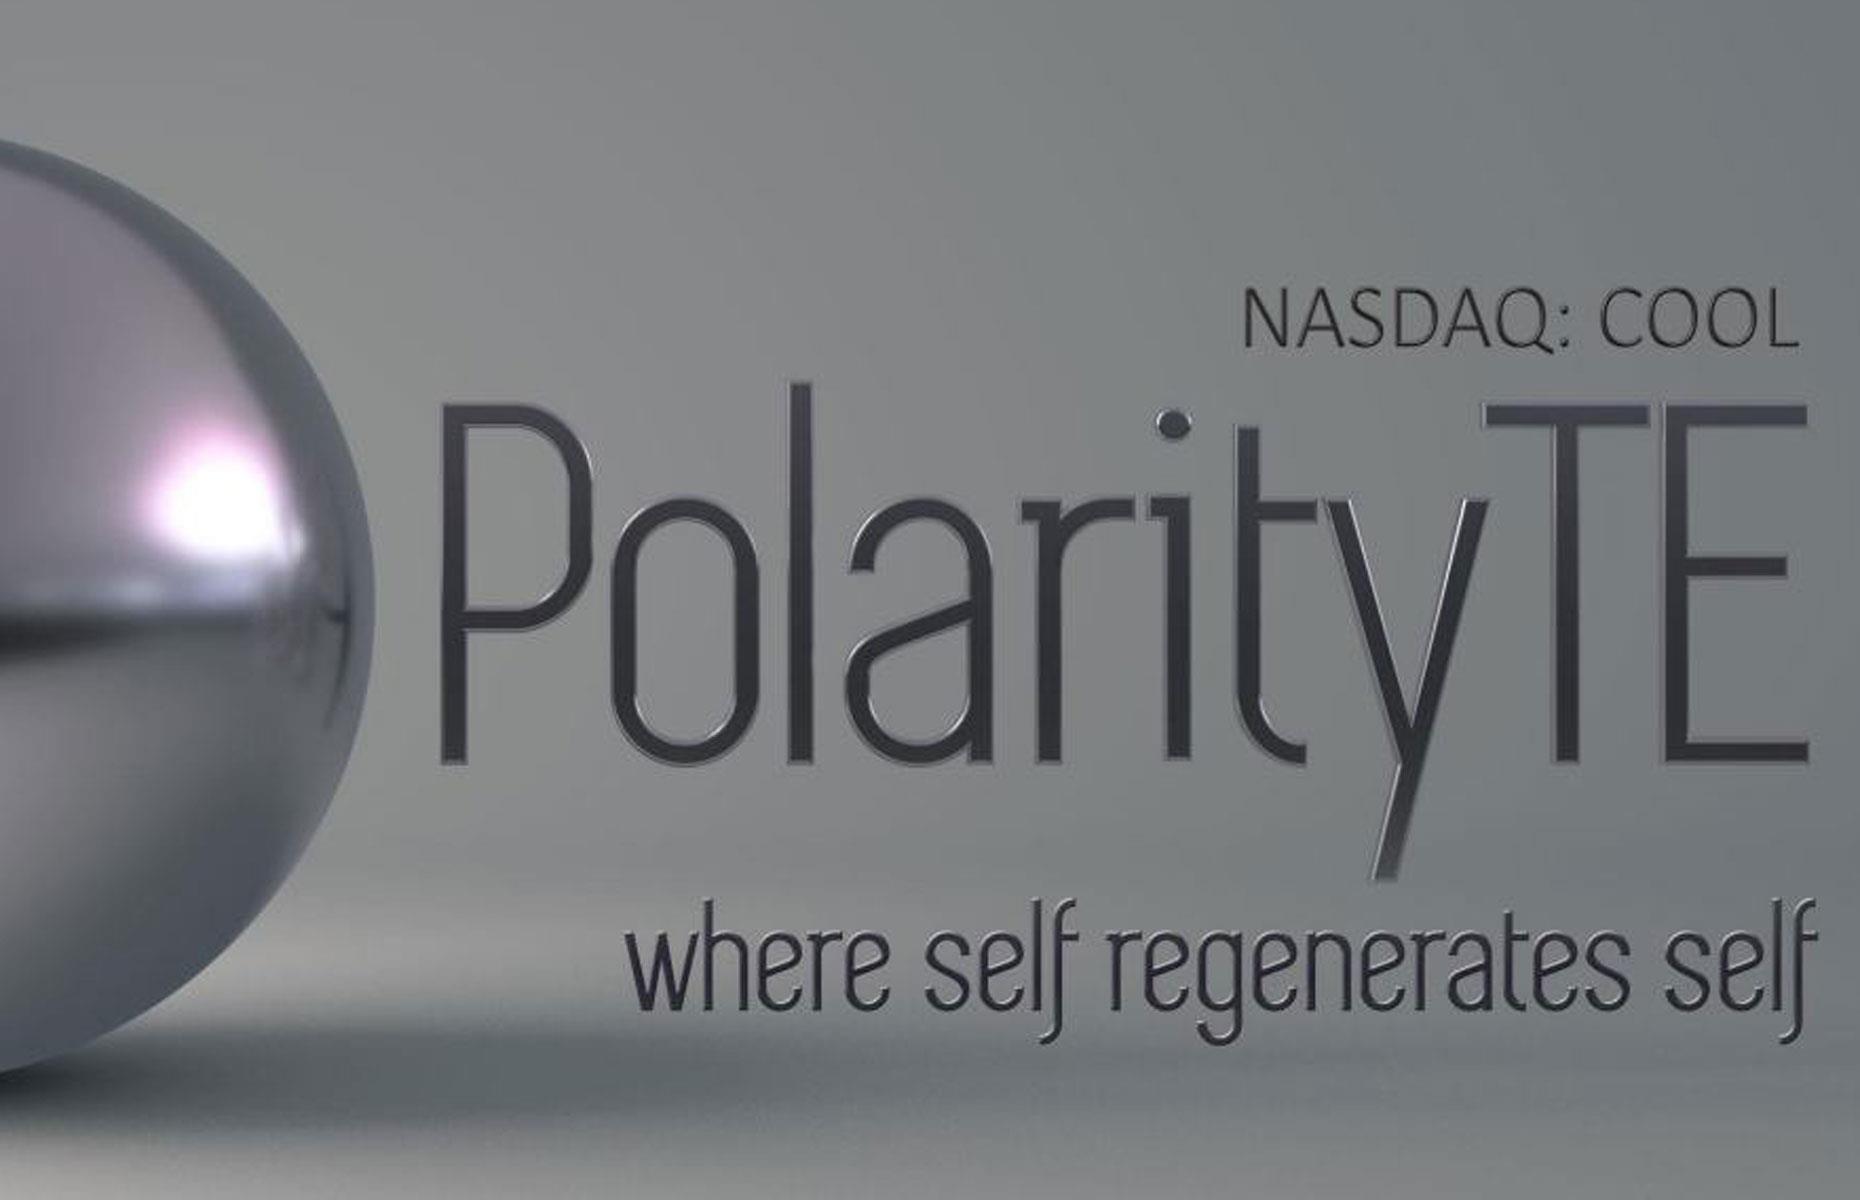 PolarityTE (NASDAQ: COOL): 744% return